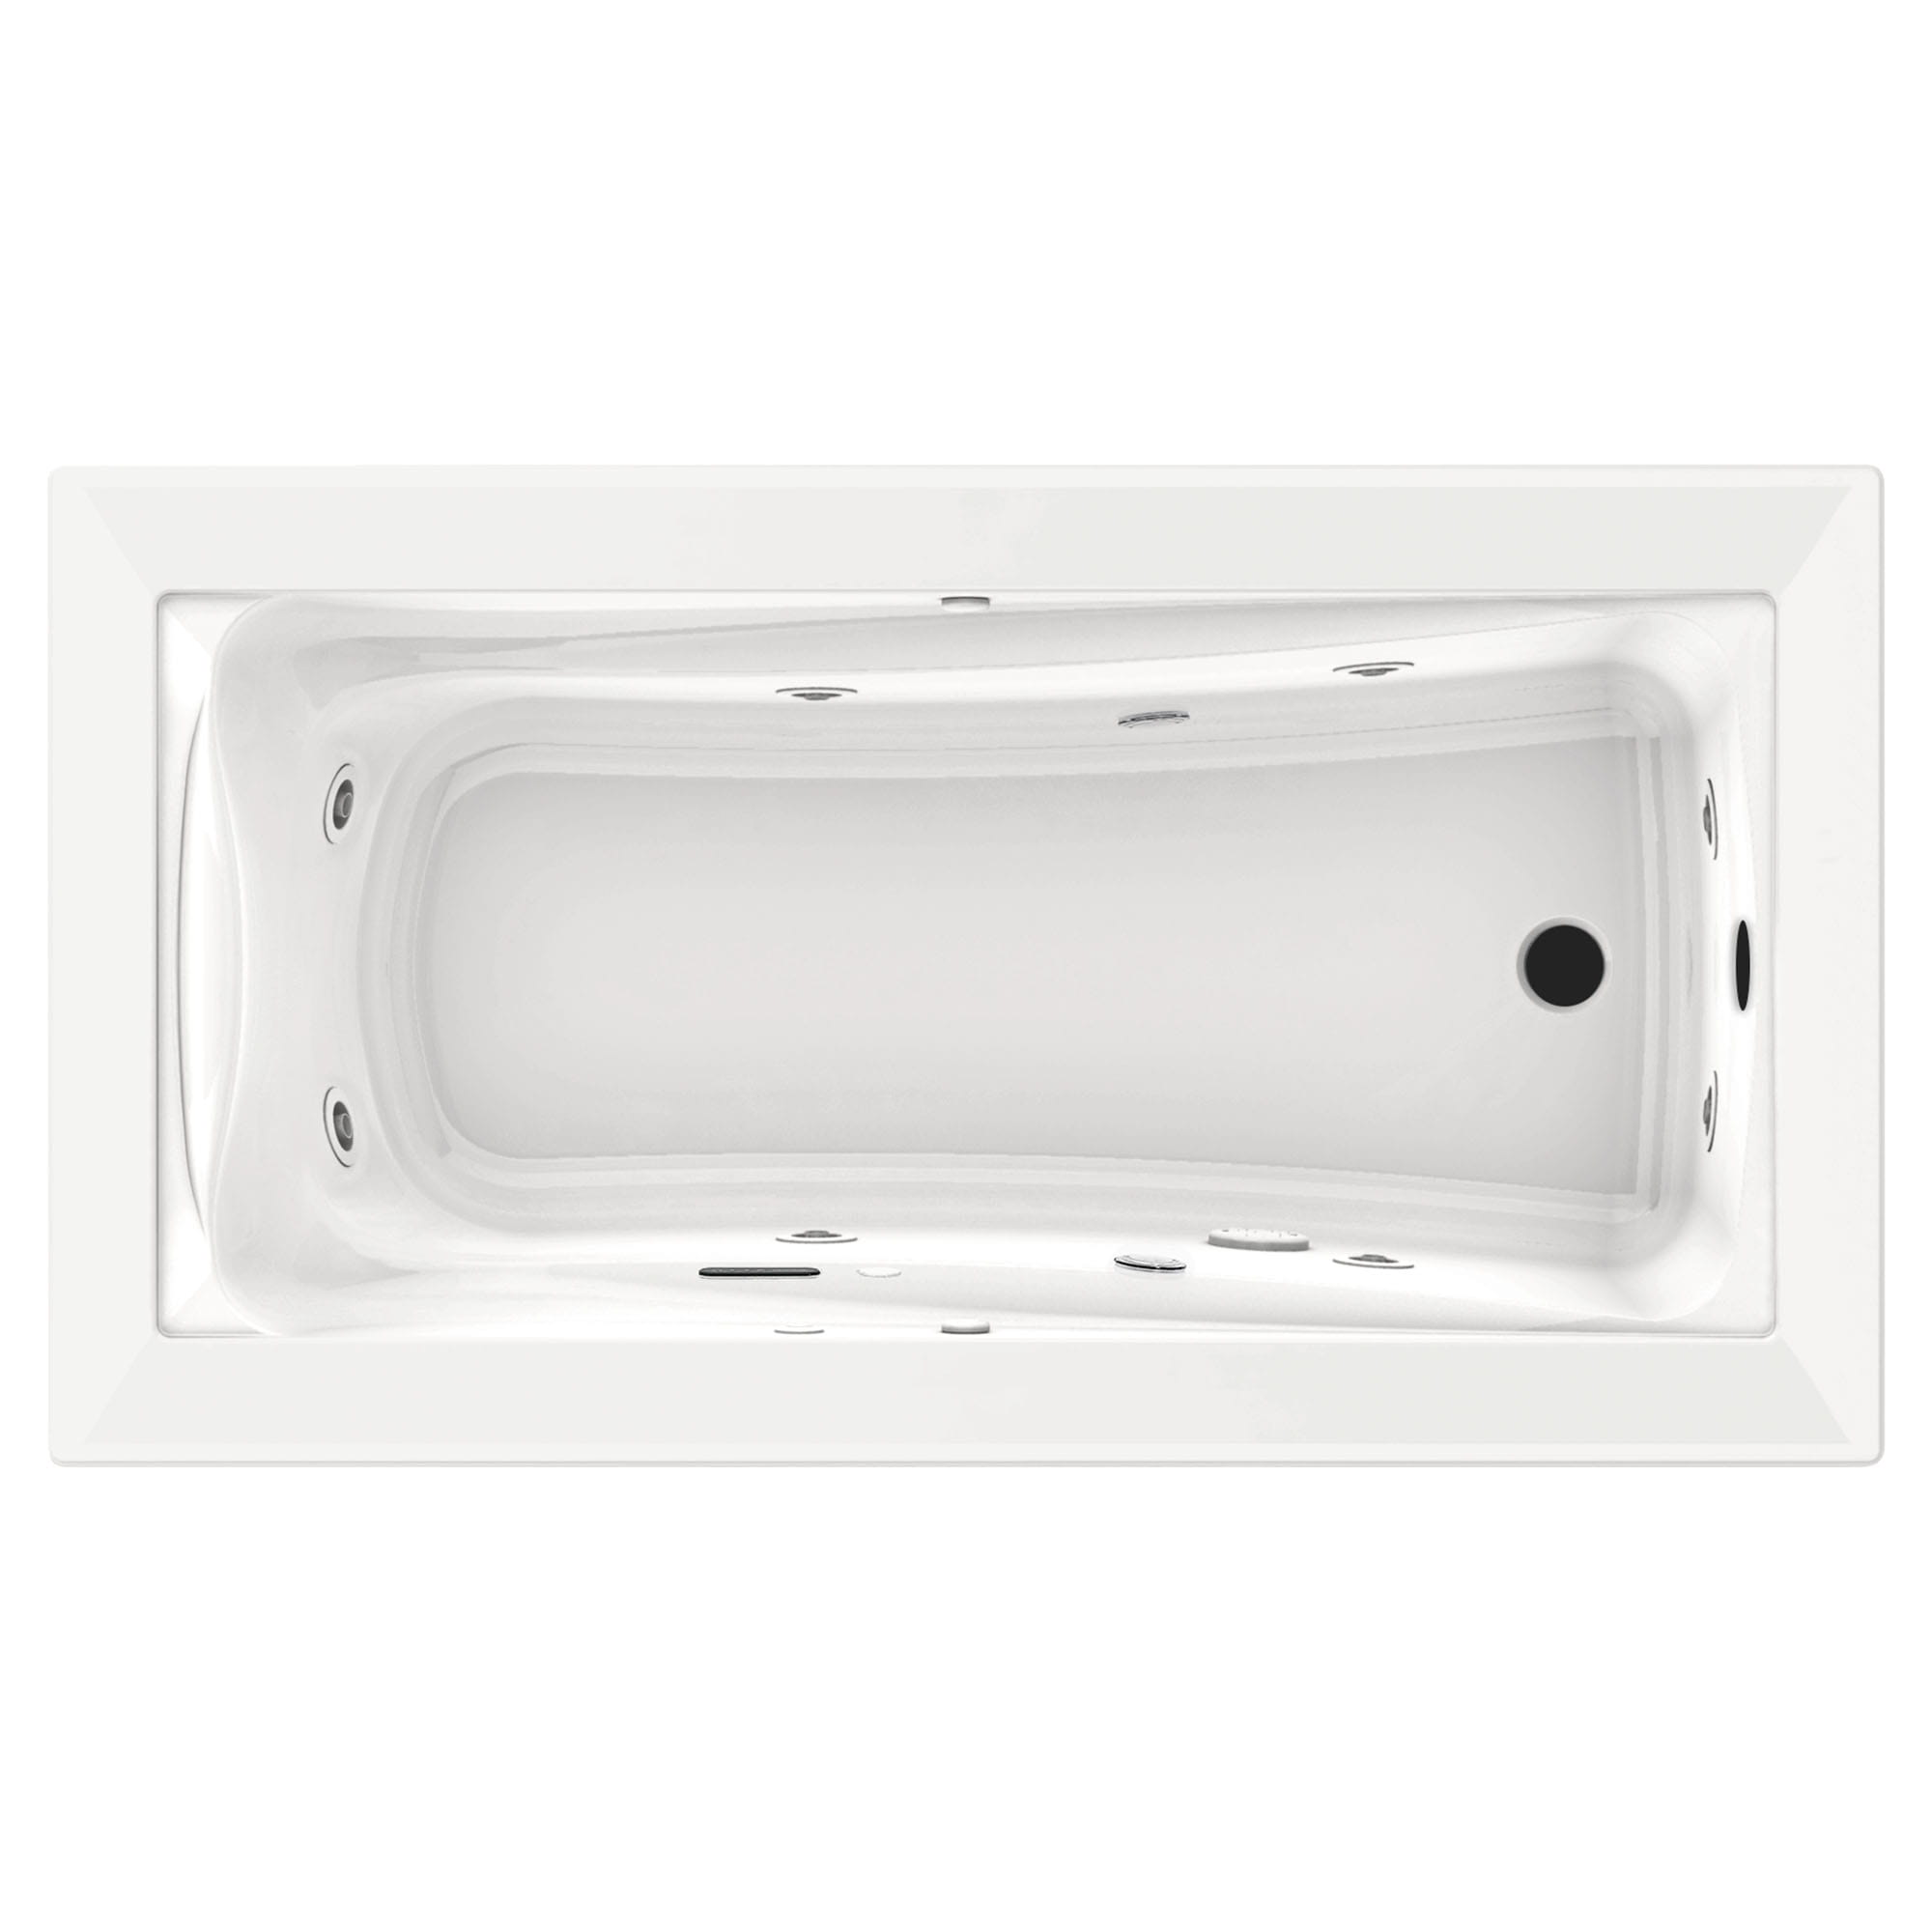 Green Tea® 60 x 36-Inch Drop-In Bathtub With EcoSilent® EverClean® Combination Spa System